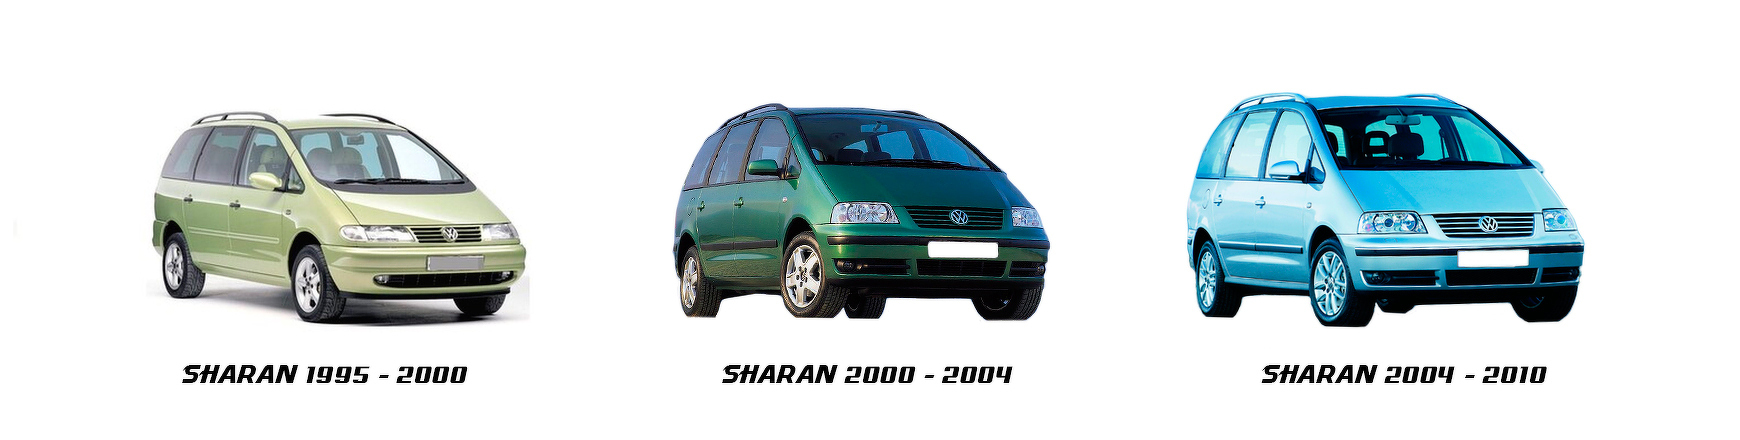 volkswagen vw sharan 1995 1996 1997 1998 2000 2001